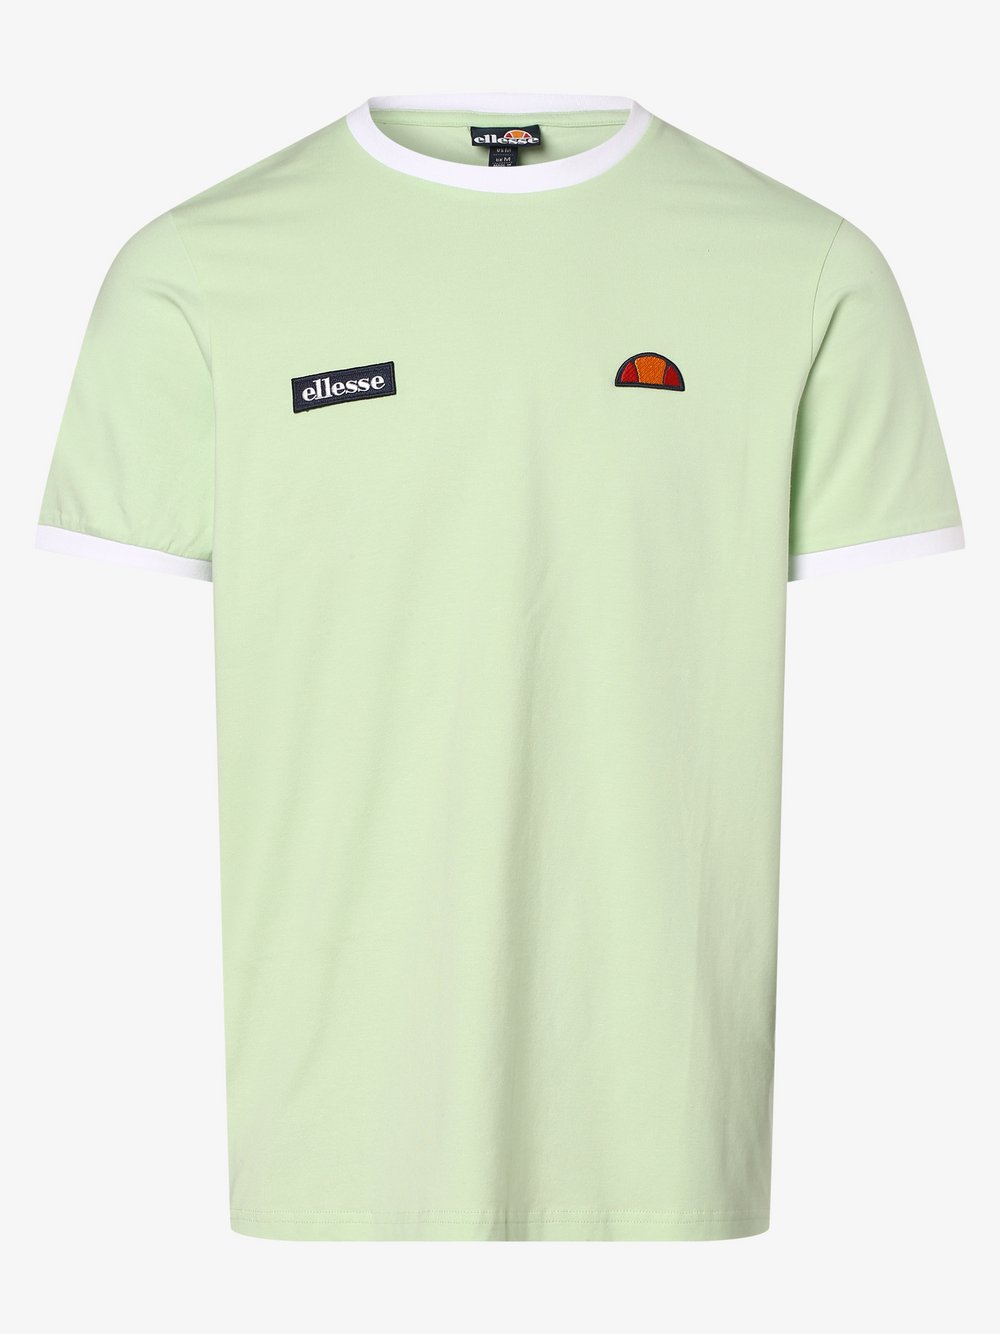 ellesse - T-shirt męski, zielony